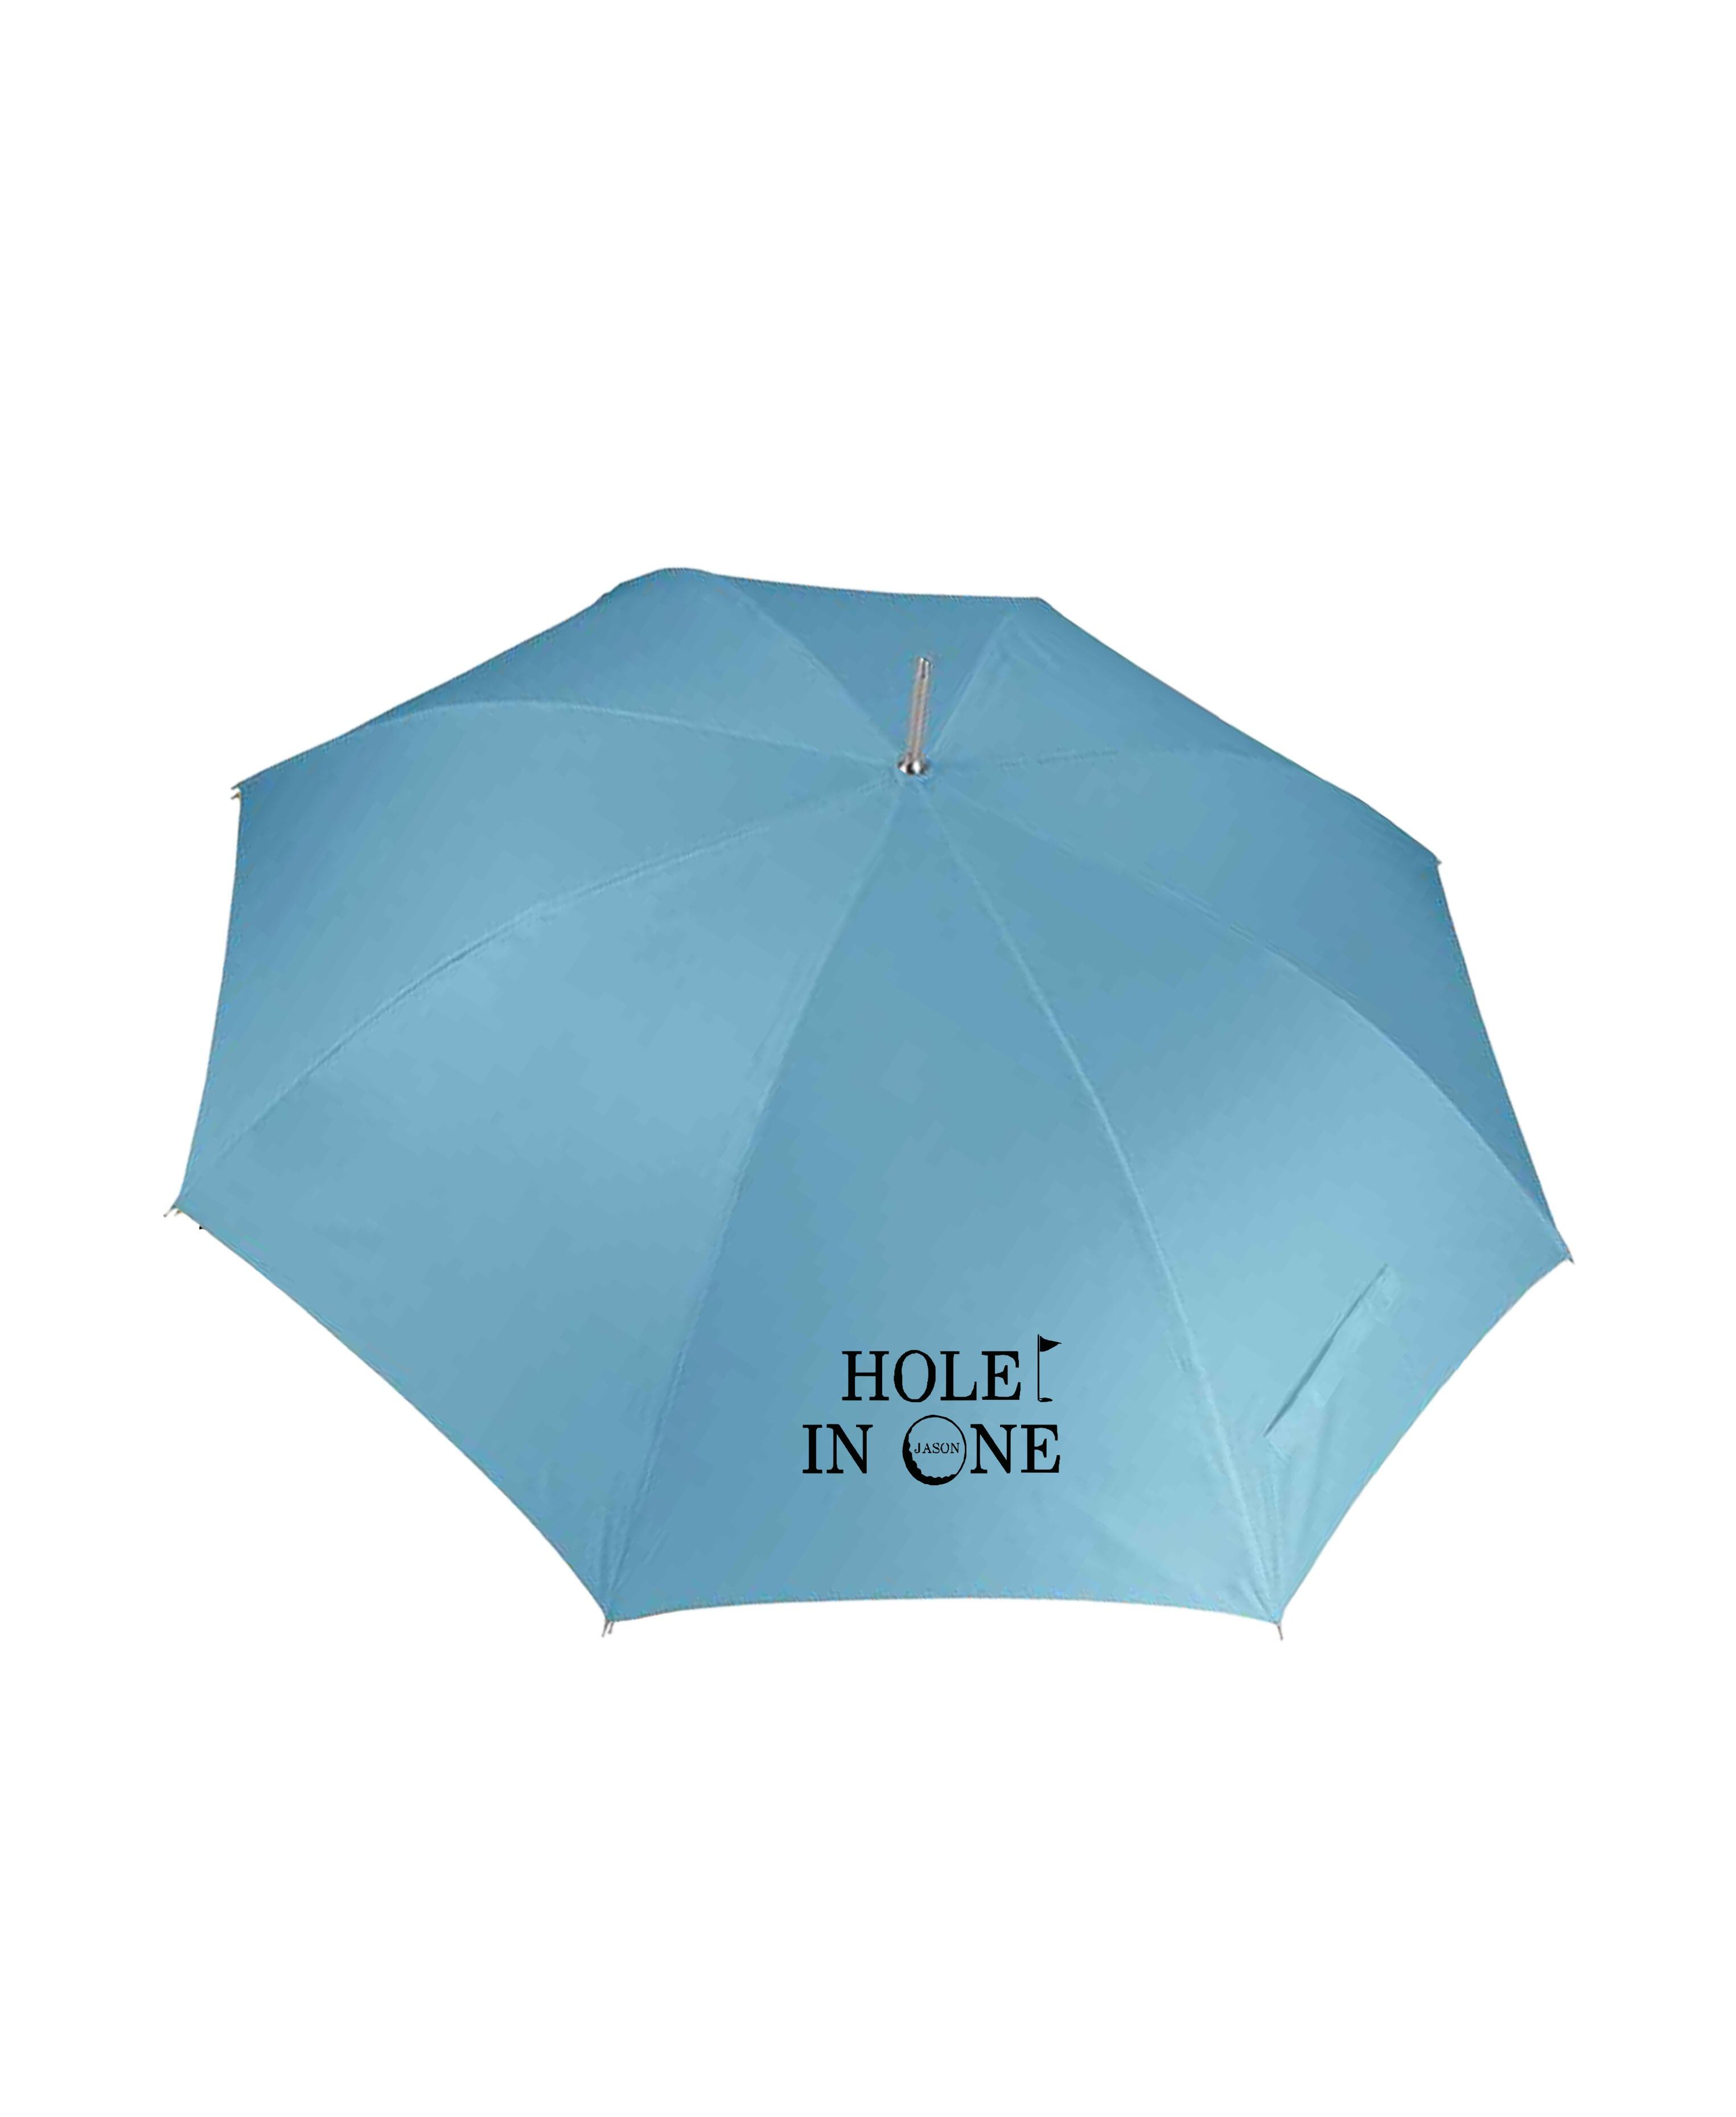 Hole in 1 Design Large Golf Umbrella Sky Blue